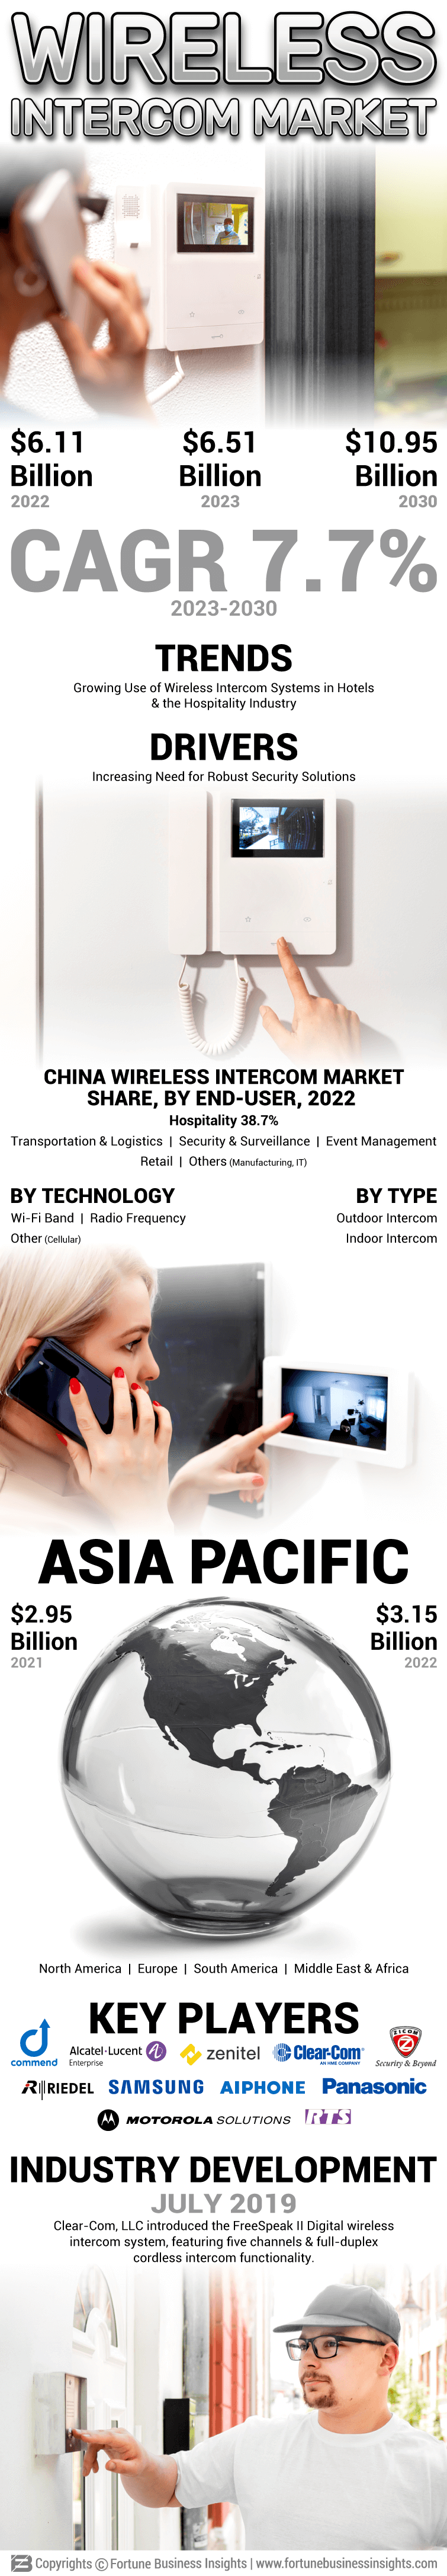 Wireless Intercom Market